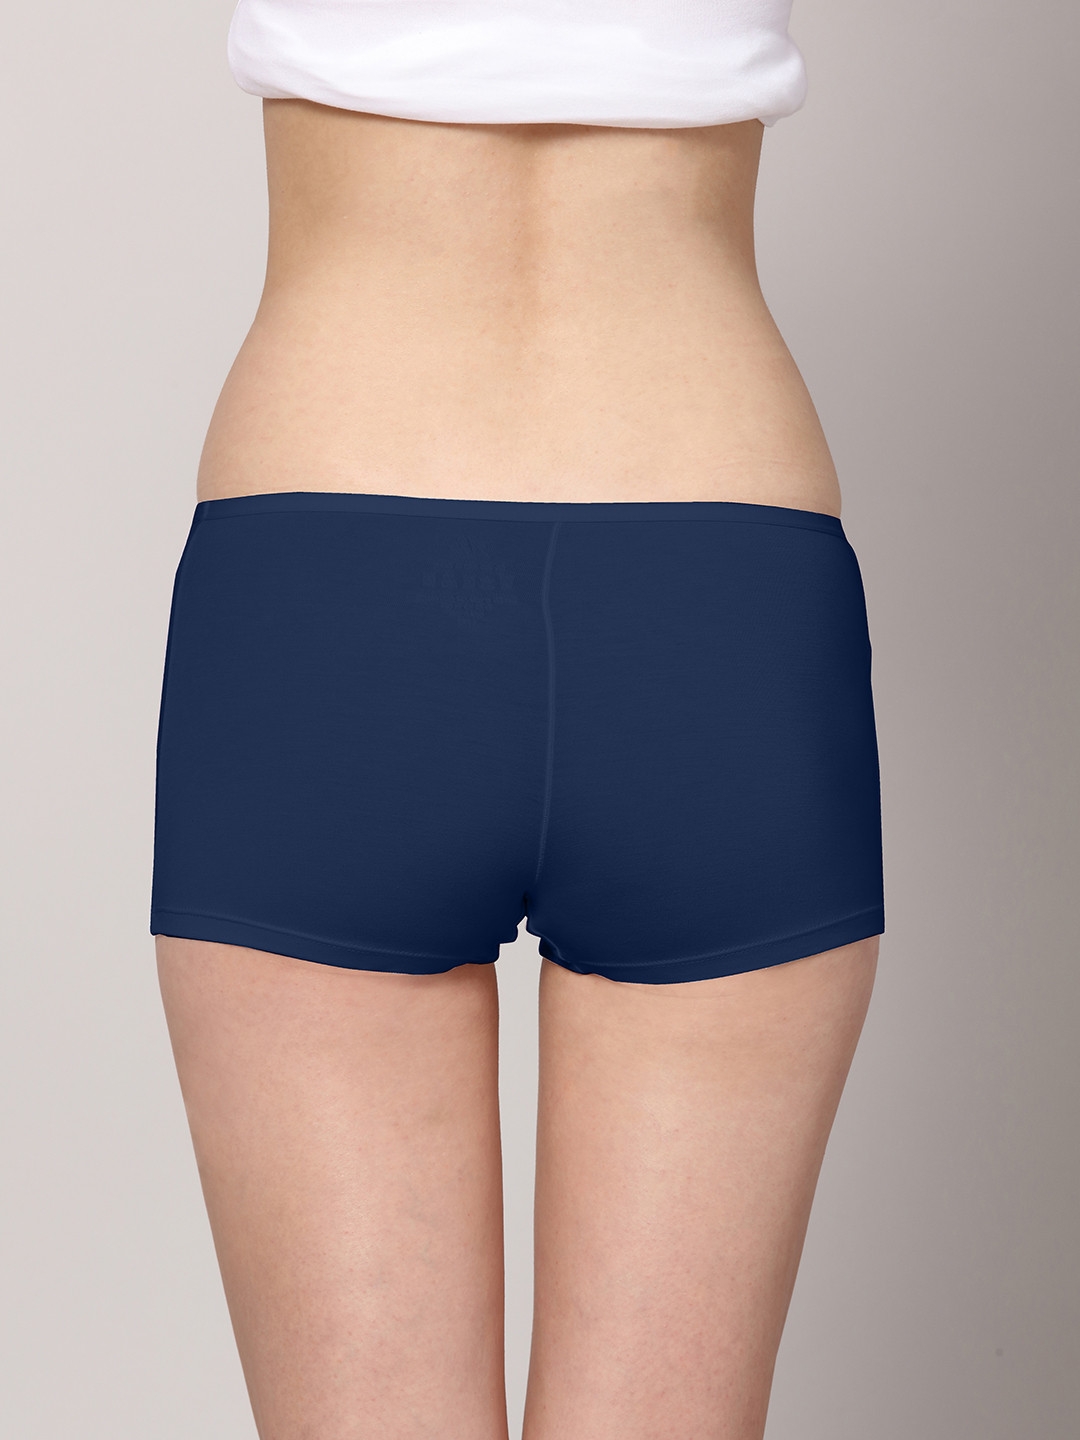 AshleyandAlvis | AshleyandAlvis Women's Panties Micro Modal, Anti Bacterial, Skinny Soft, Premium Boyshorts -No Itching, Sweat Proof, Double In-seam Gusset 4